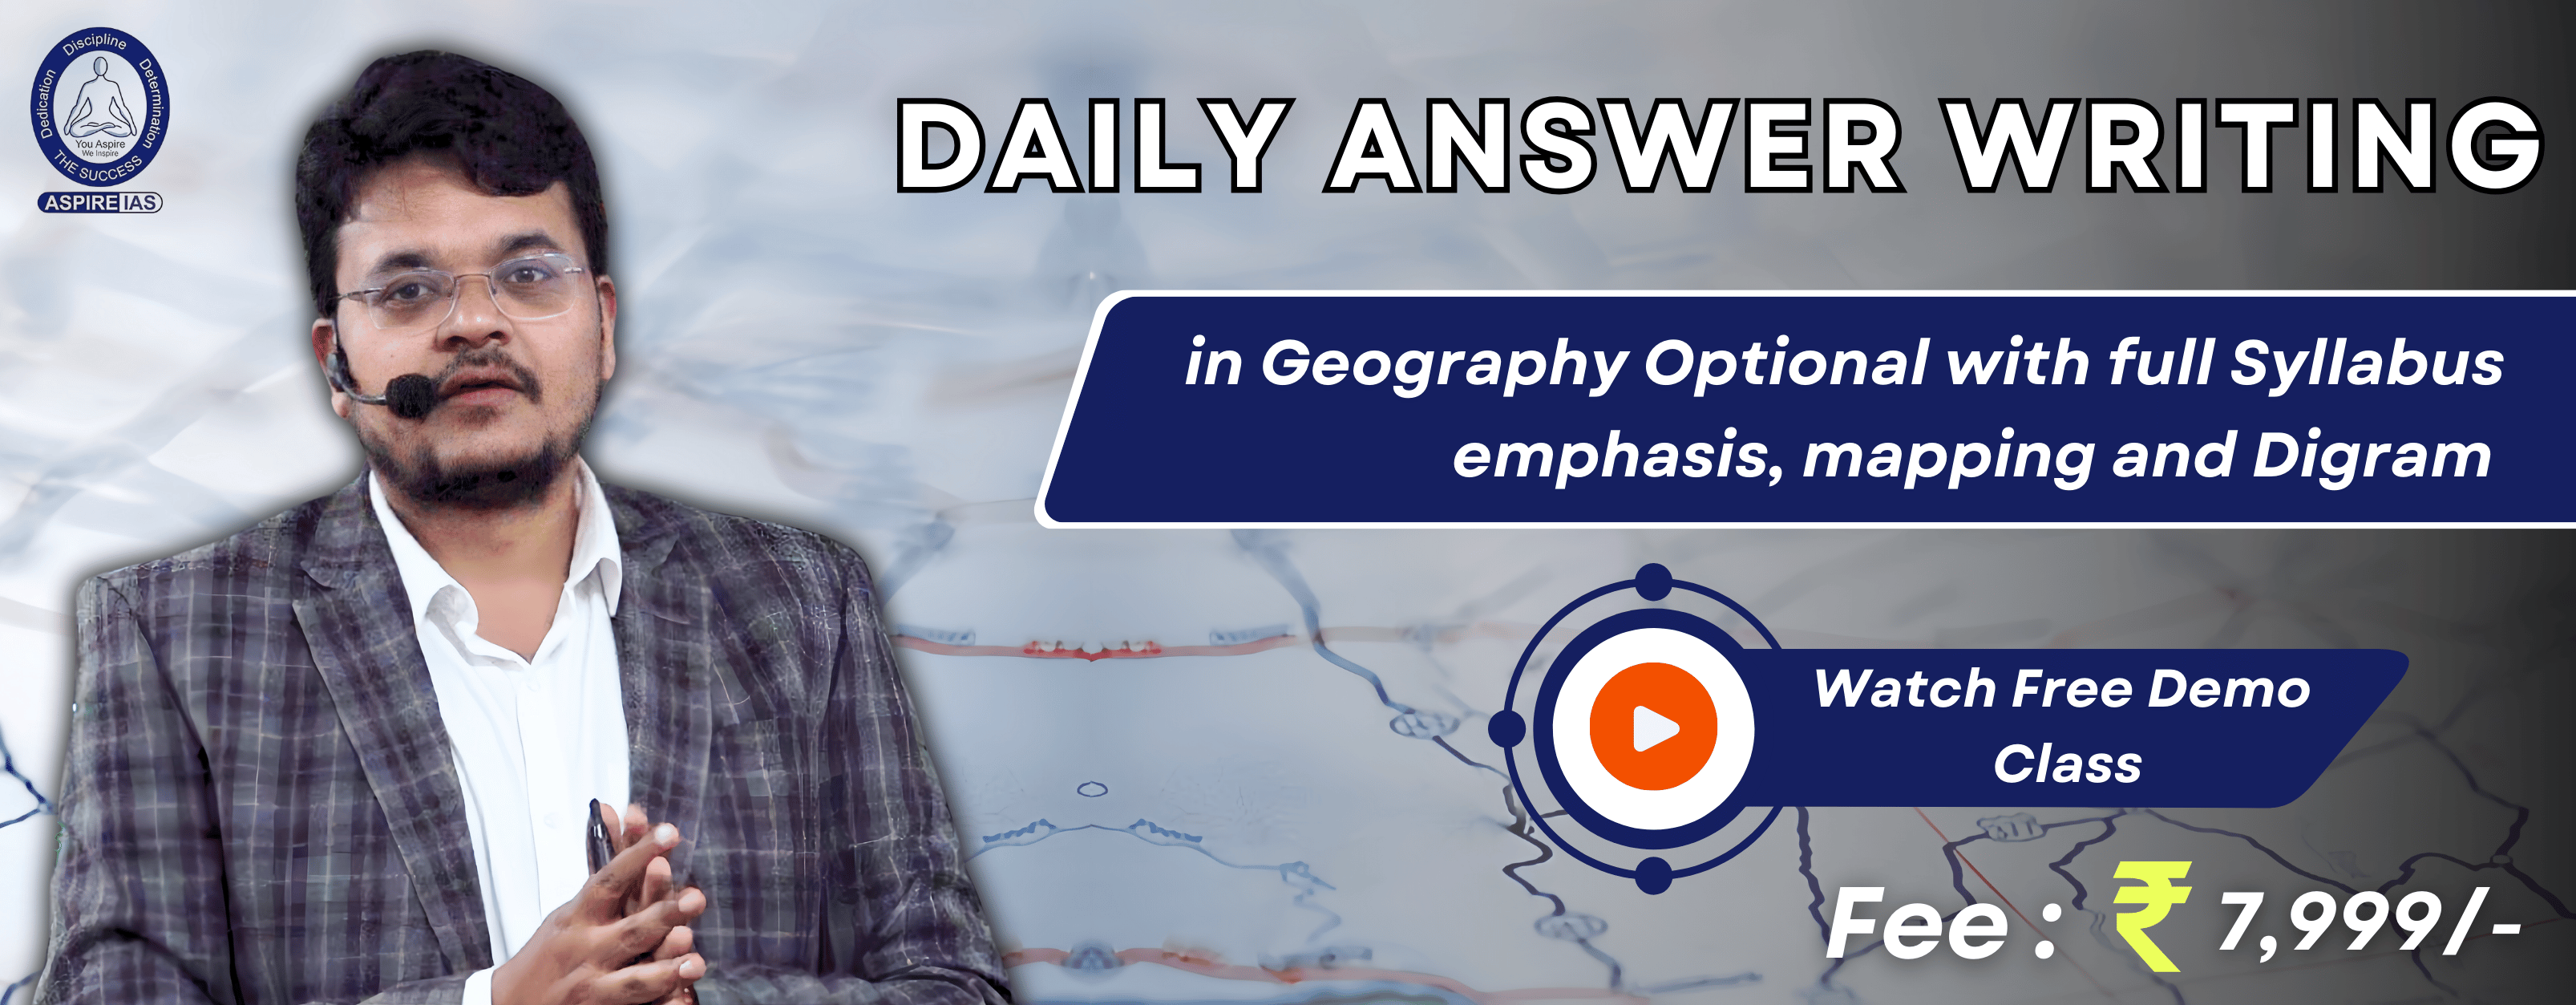 geography-optional DailyAnswerWriting